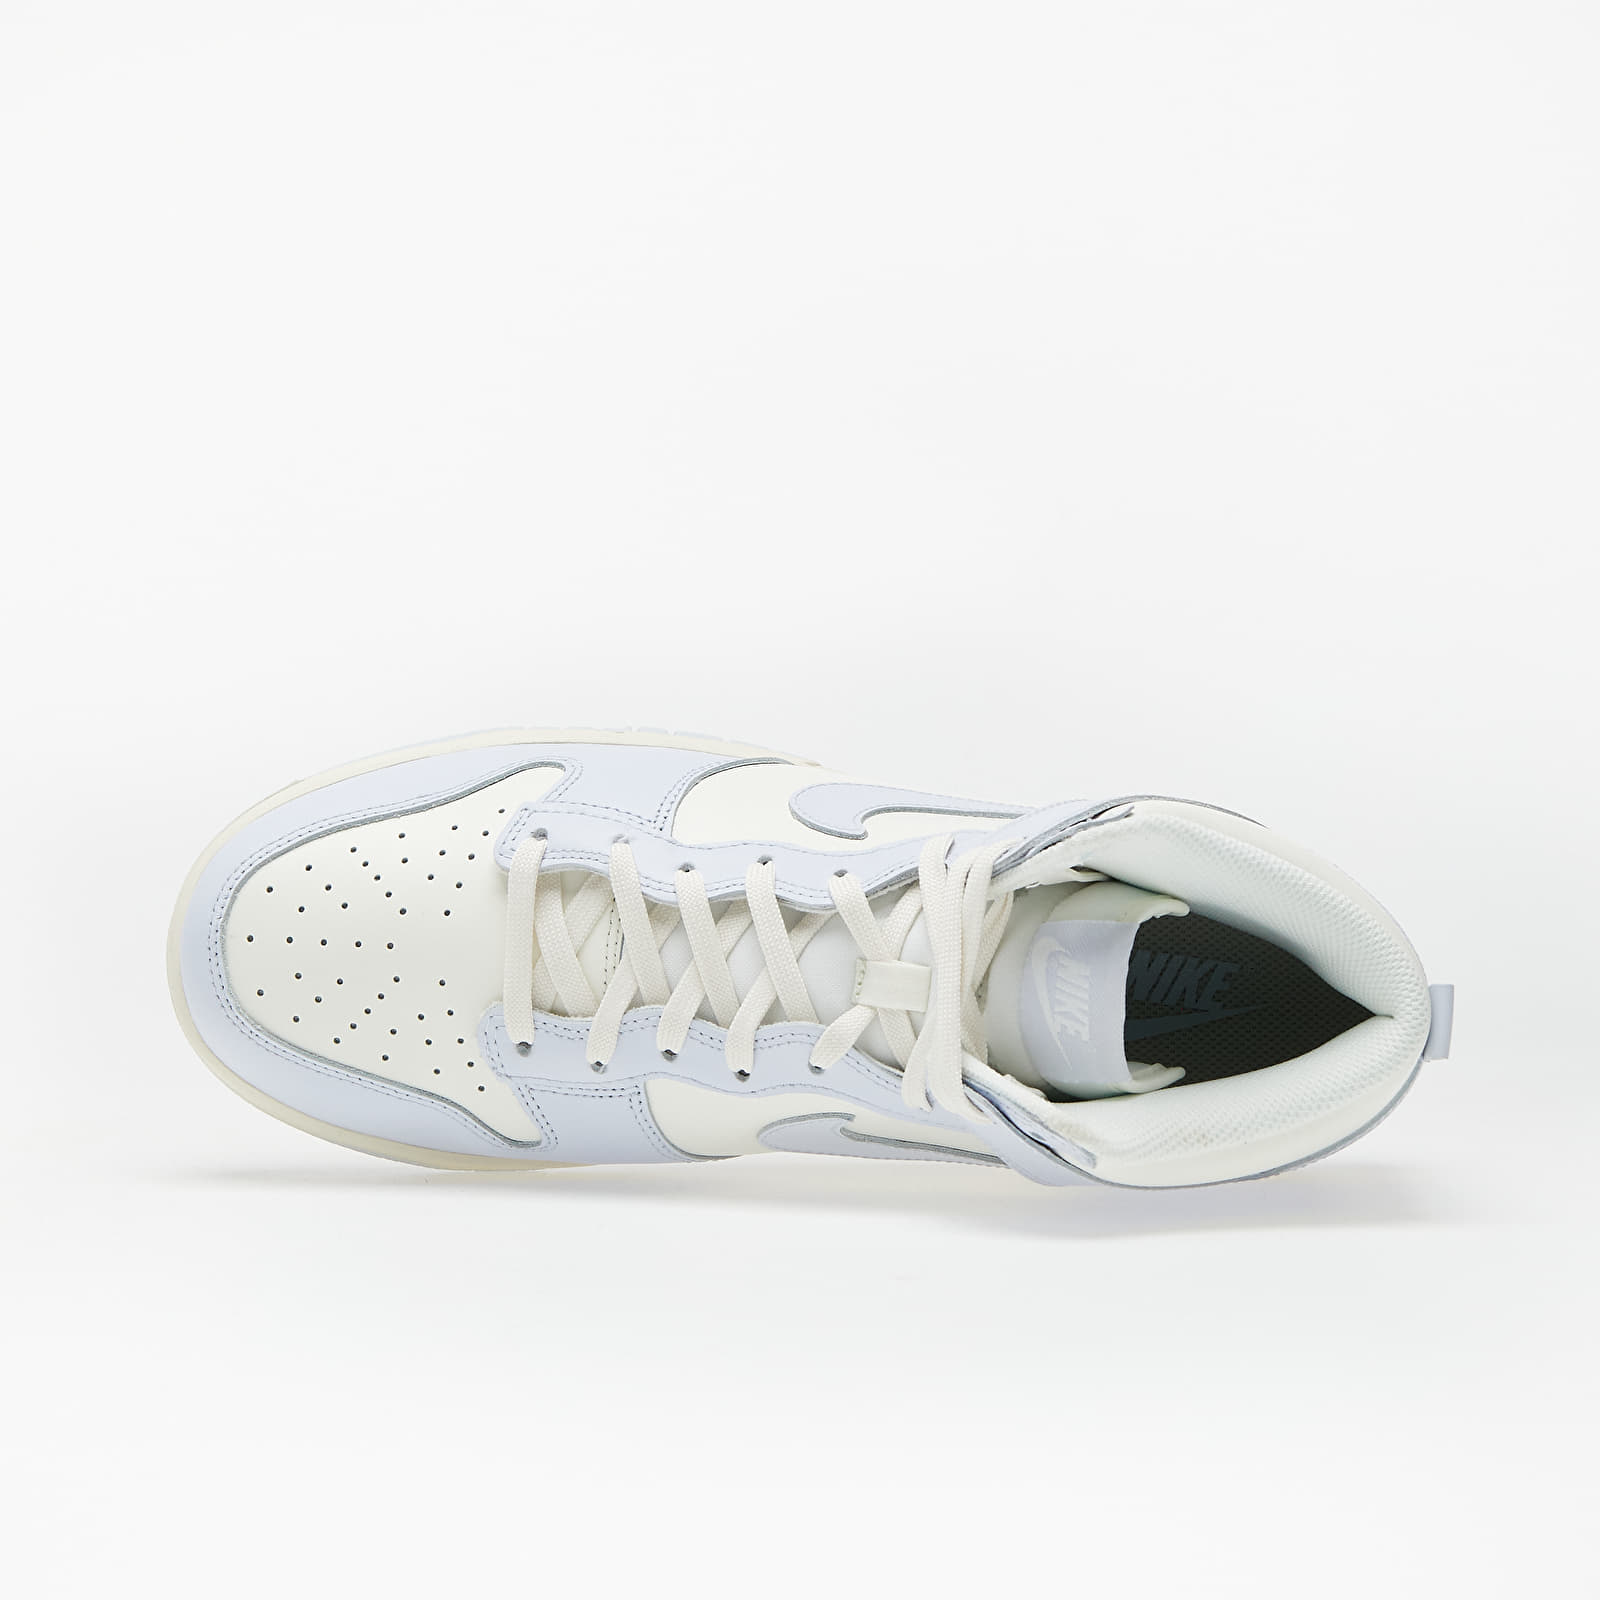 Women's shoes Nike W Dunk High Sail/ Football Grey-Pale Ivory